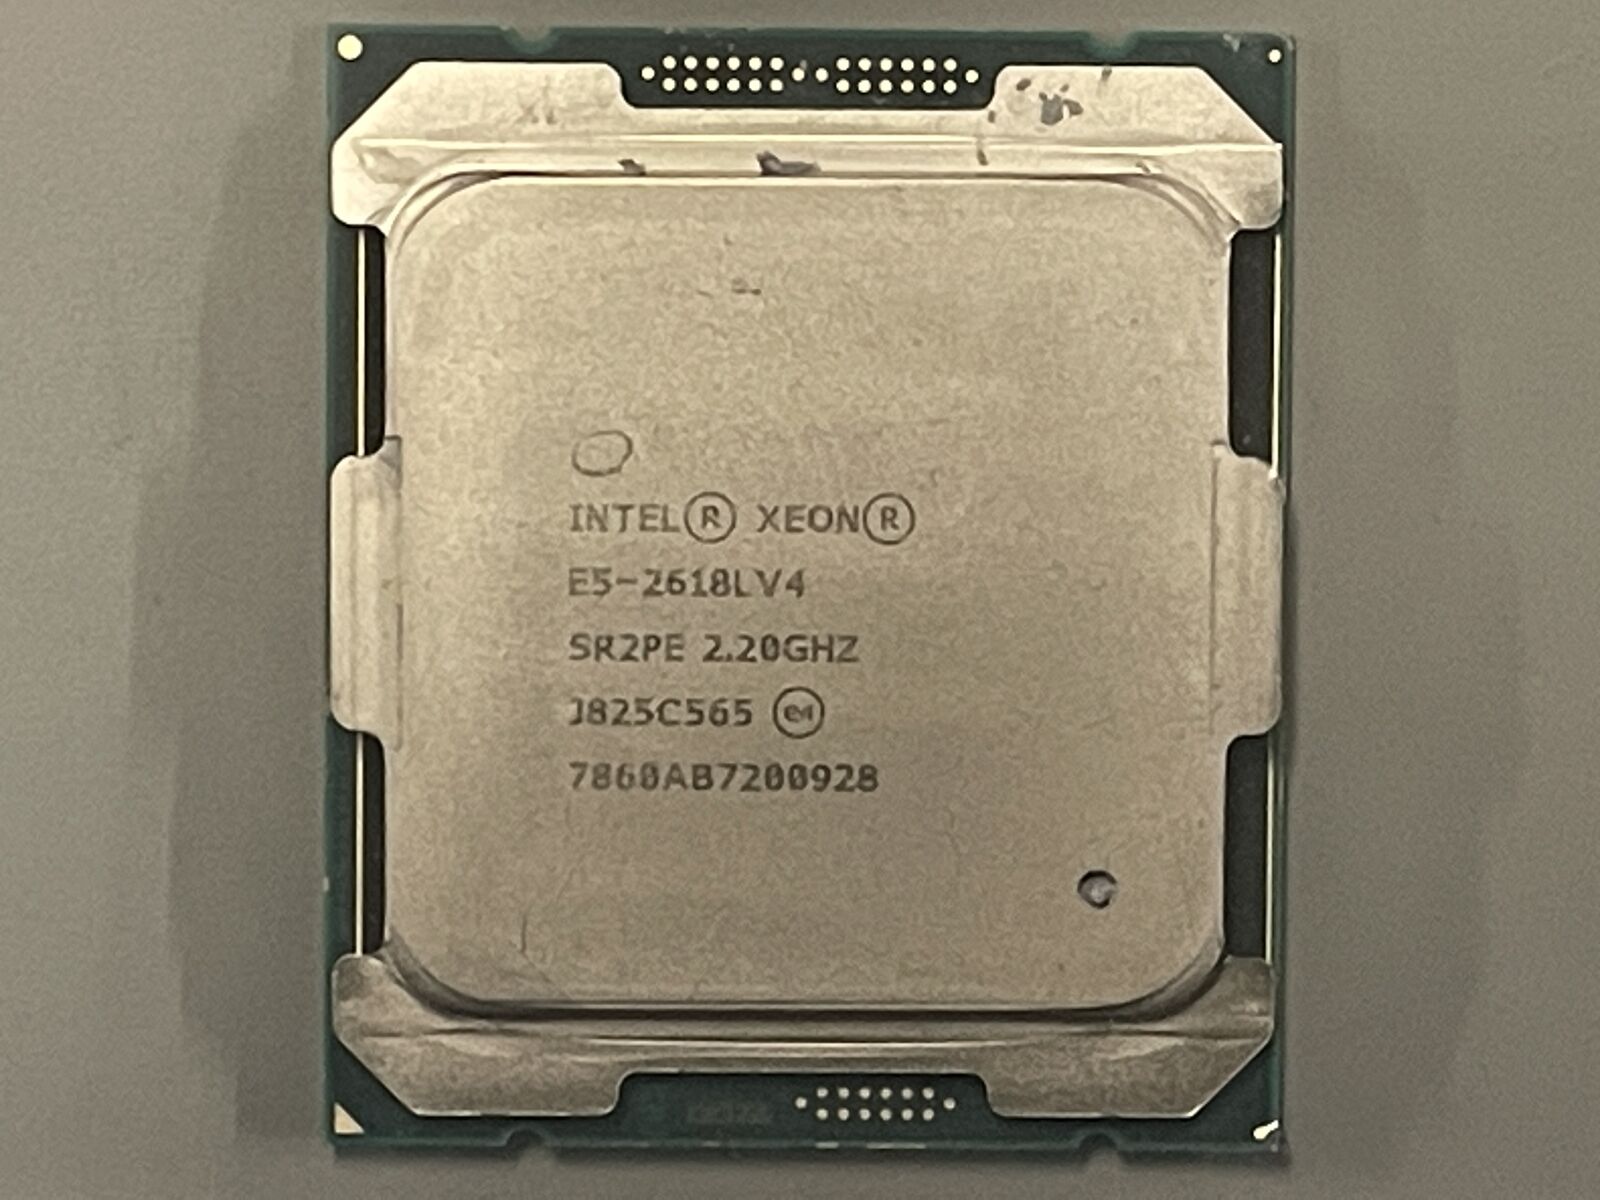 Lot of 10 Intel Xeon E5-2618L V4 SR2PE 2.2Ghz BULK OFFERS ACCEPTED